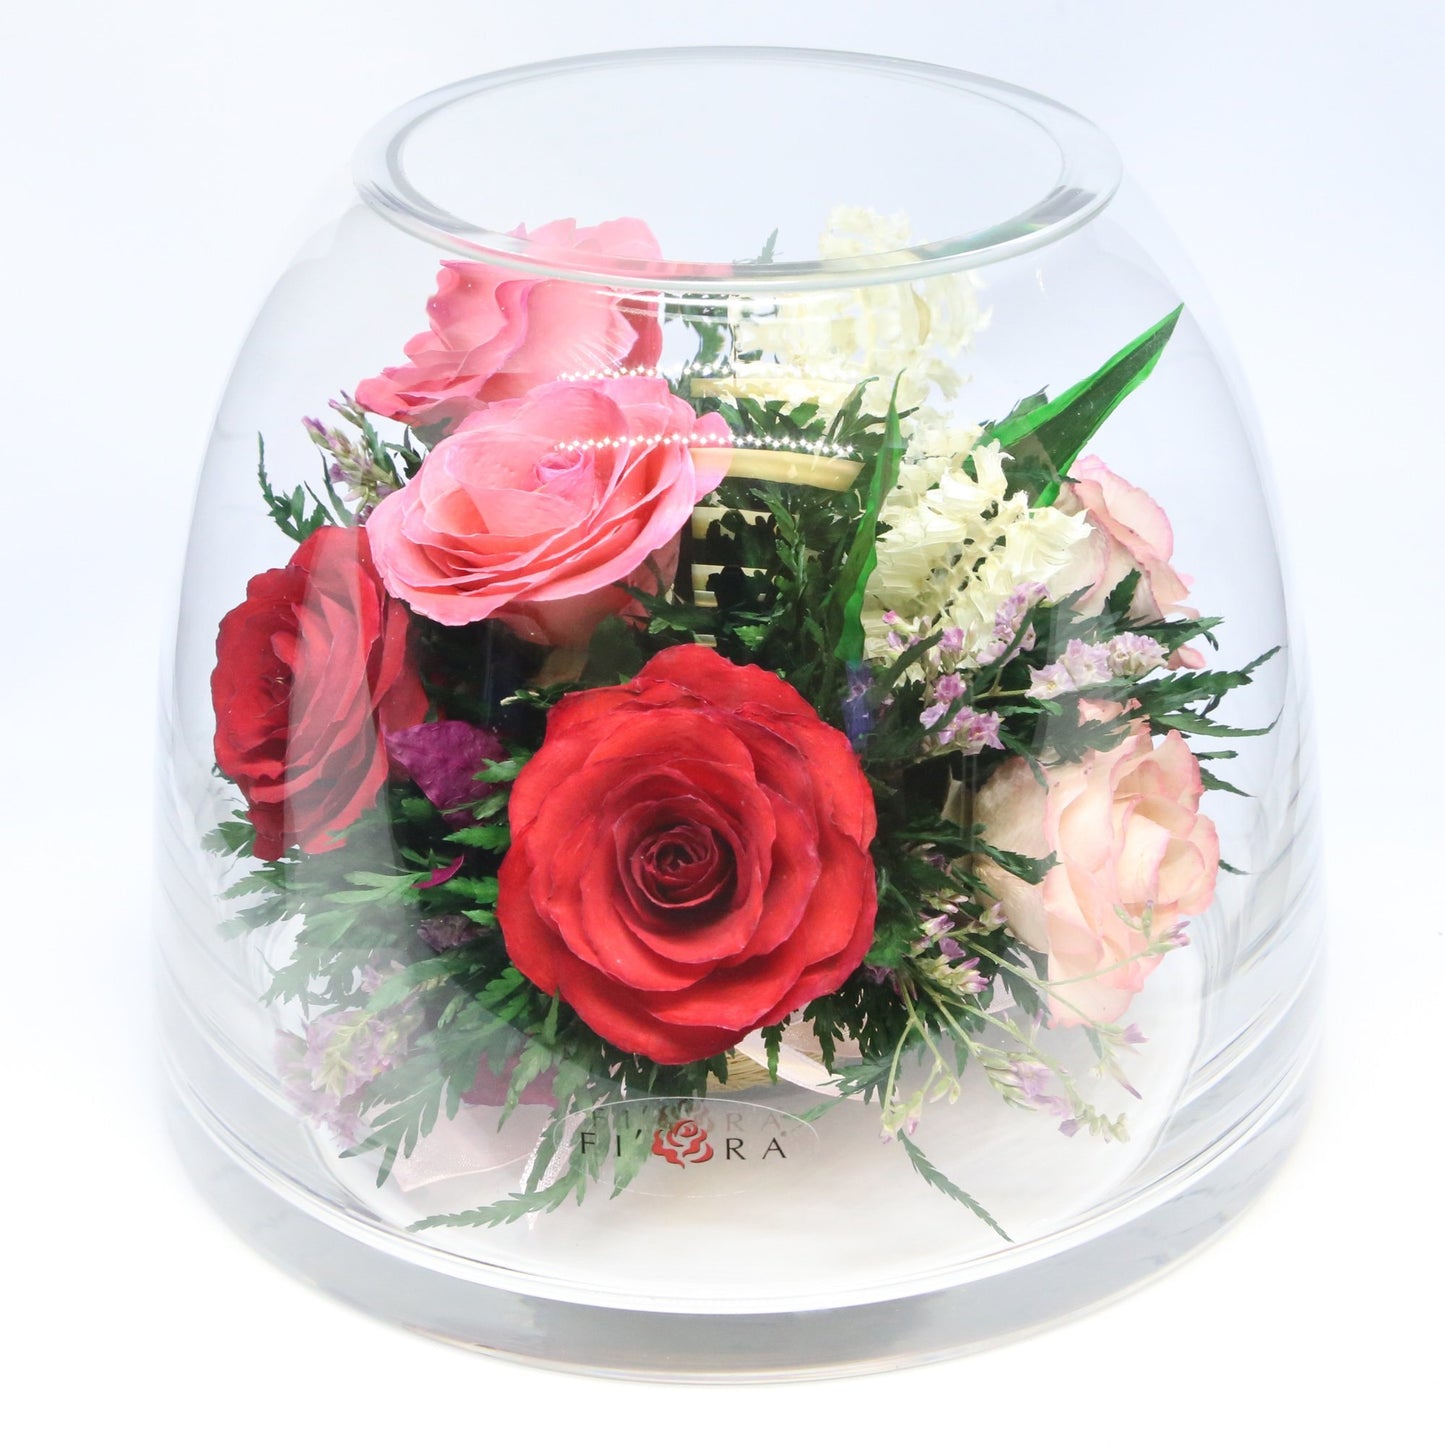 Fiora Flower - Preserved in Glass